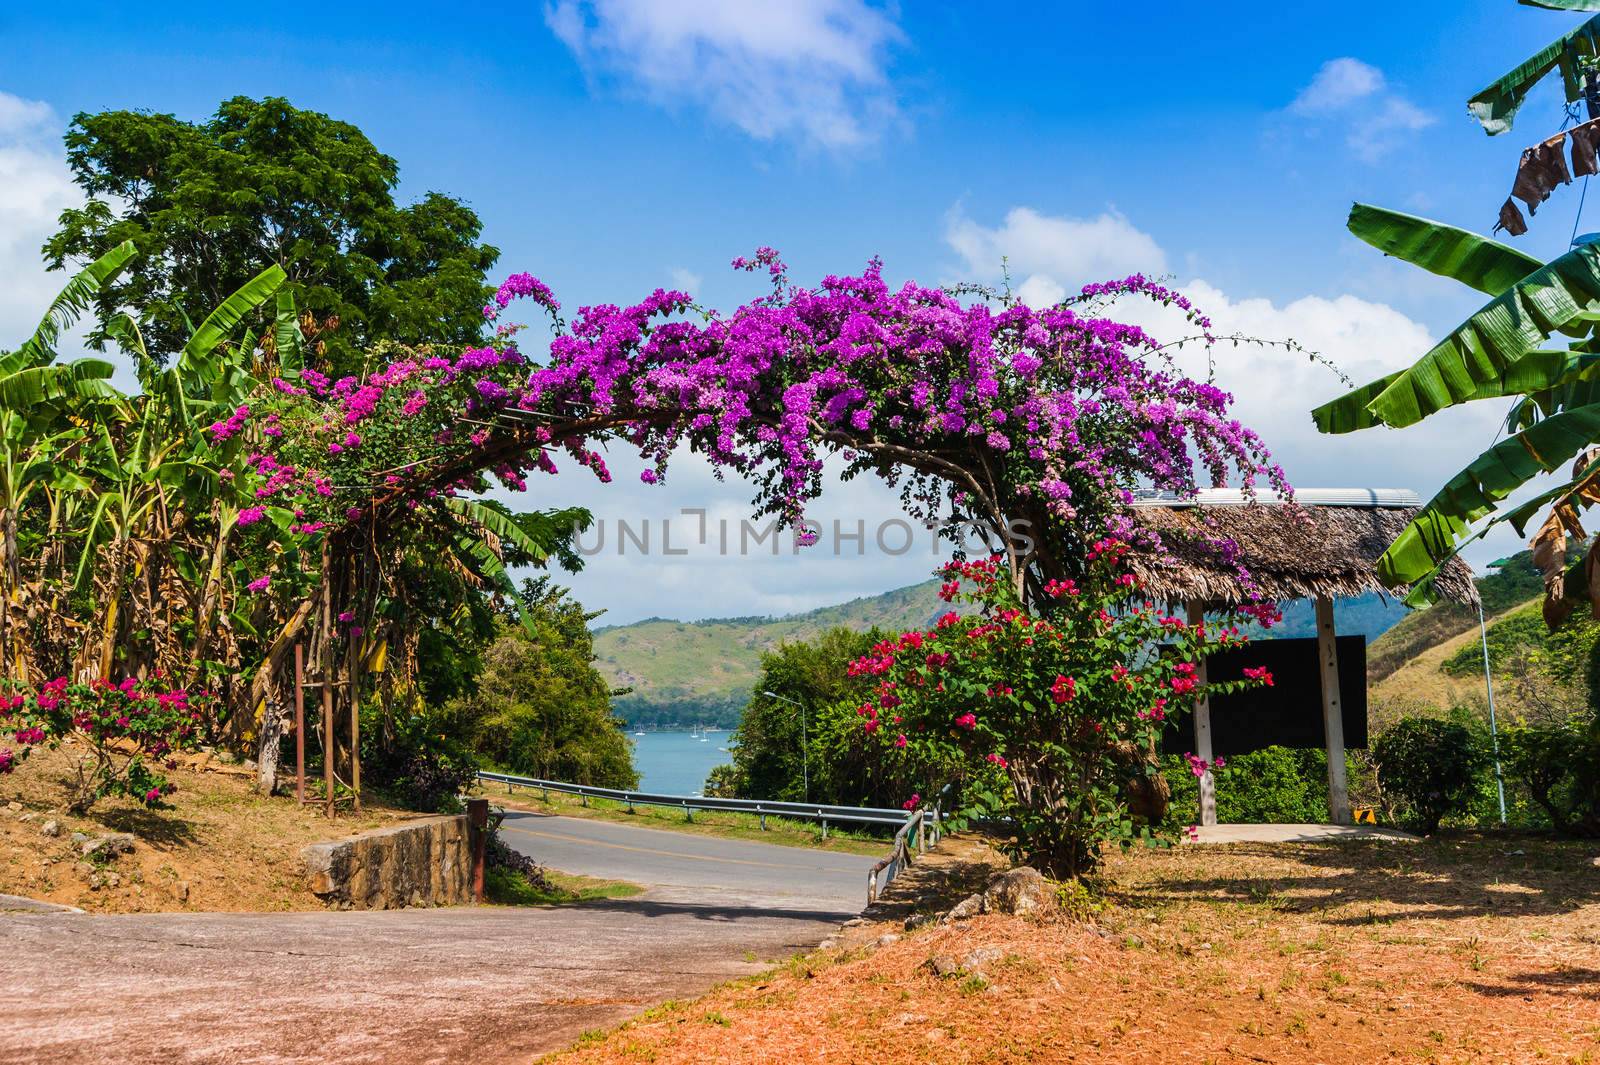 Arch of purple flowers  in Thailand by oleg_zhukov